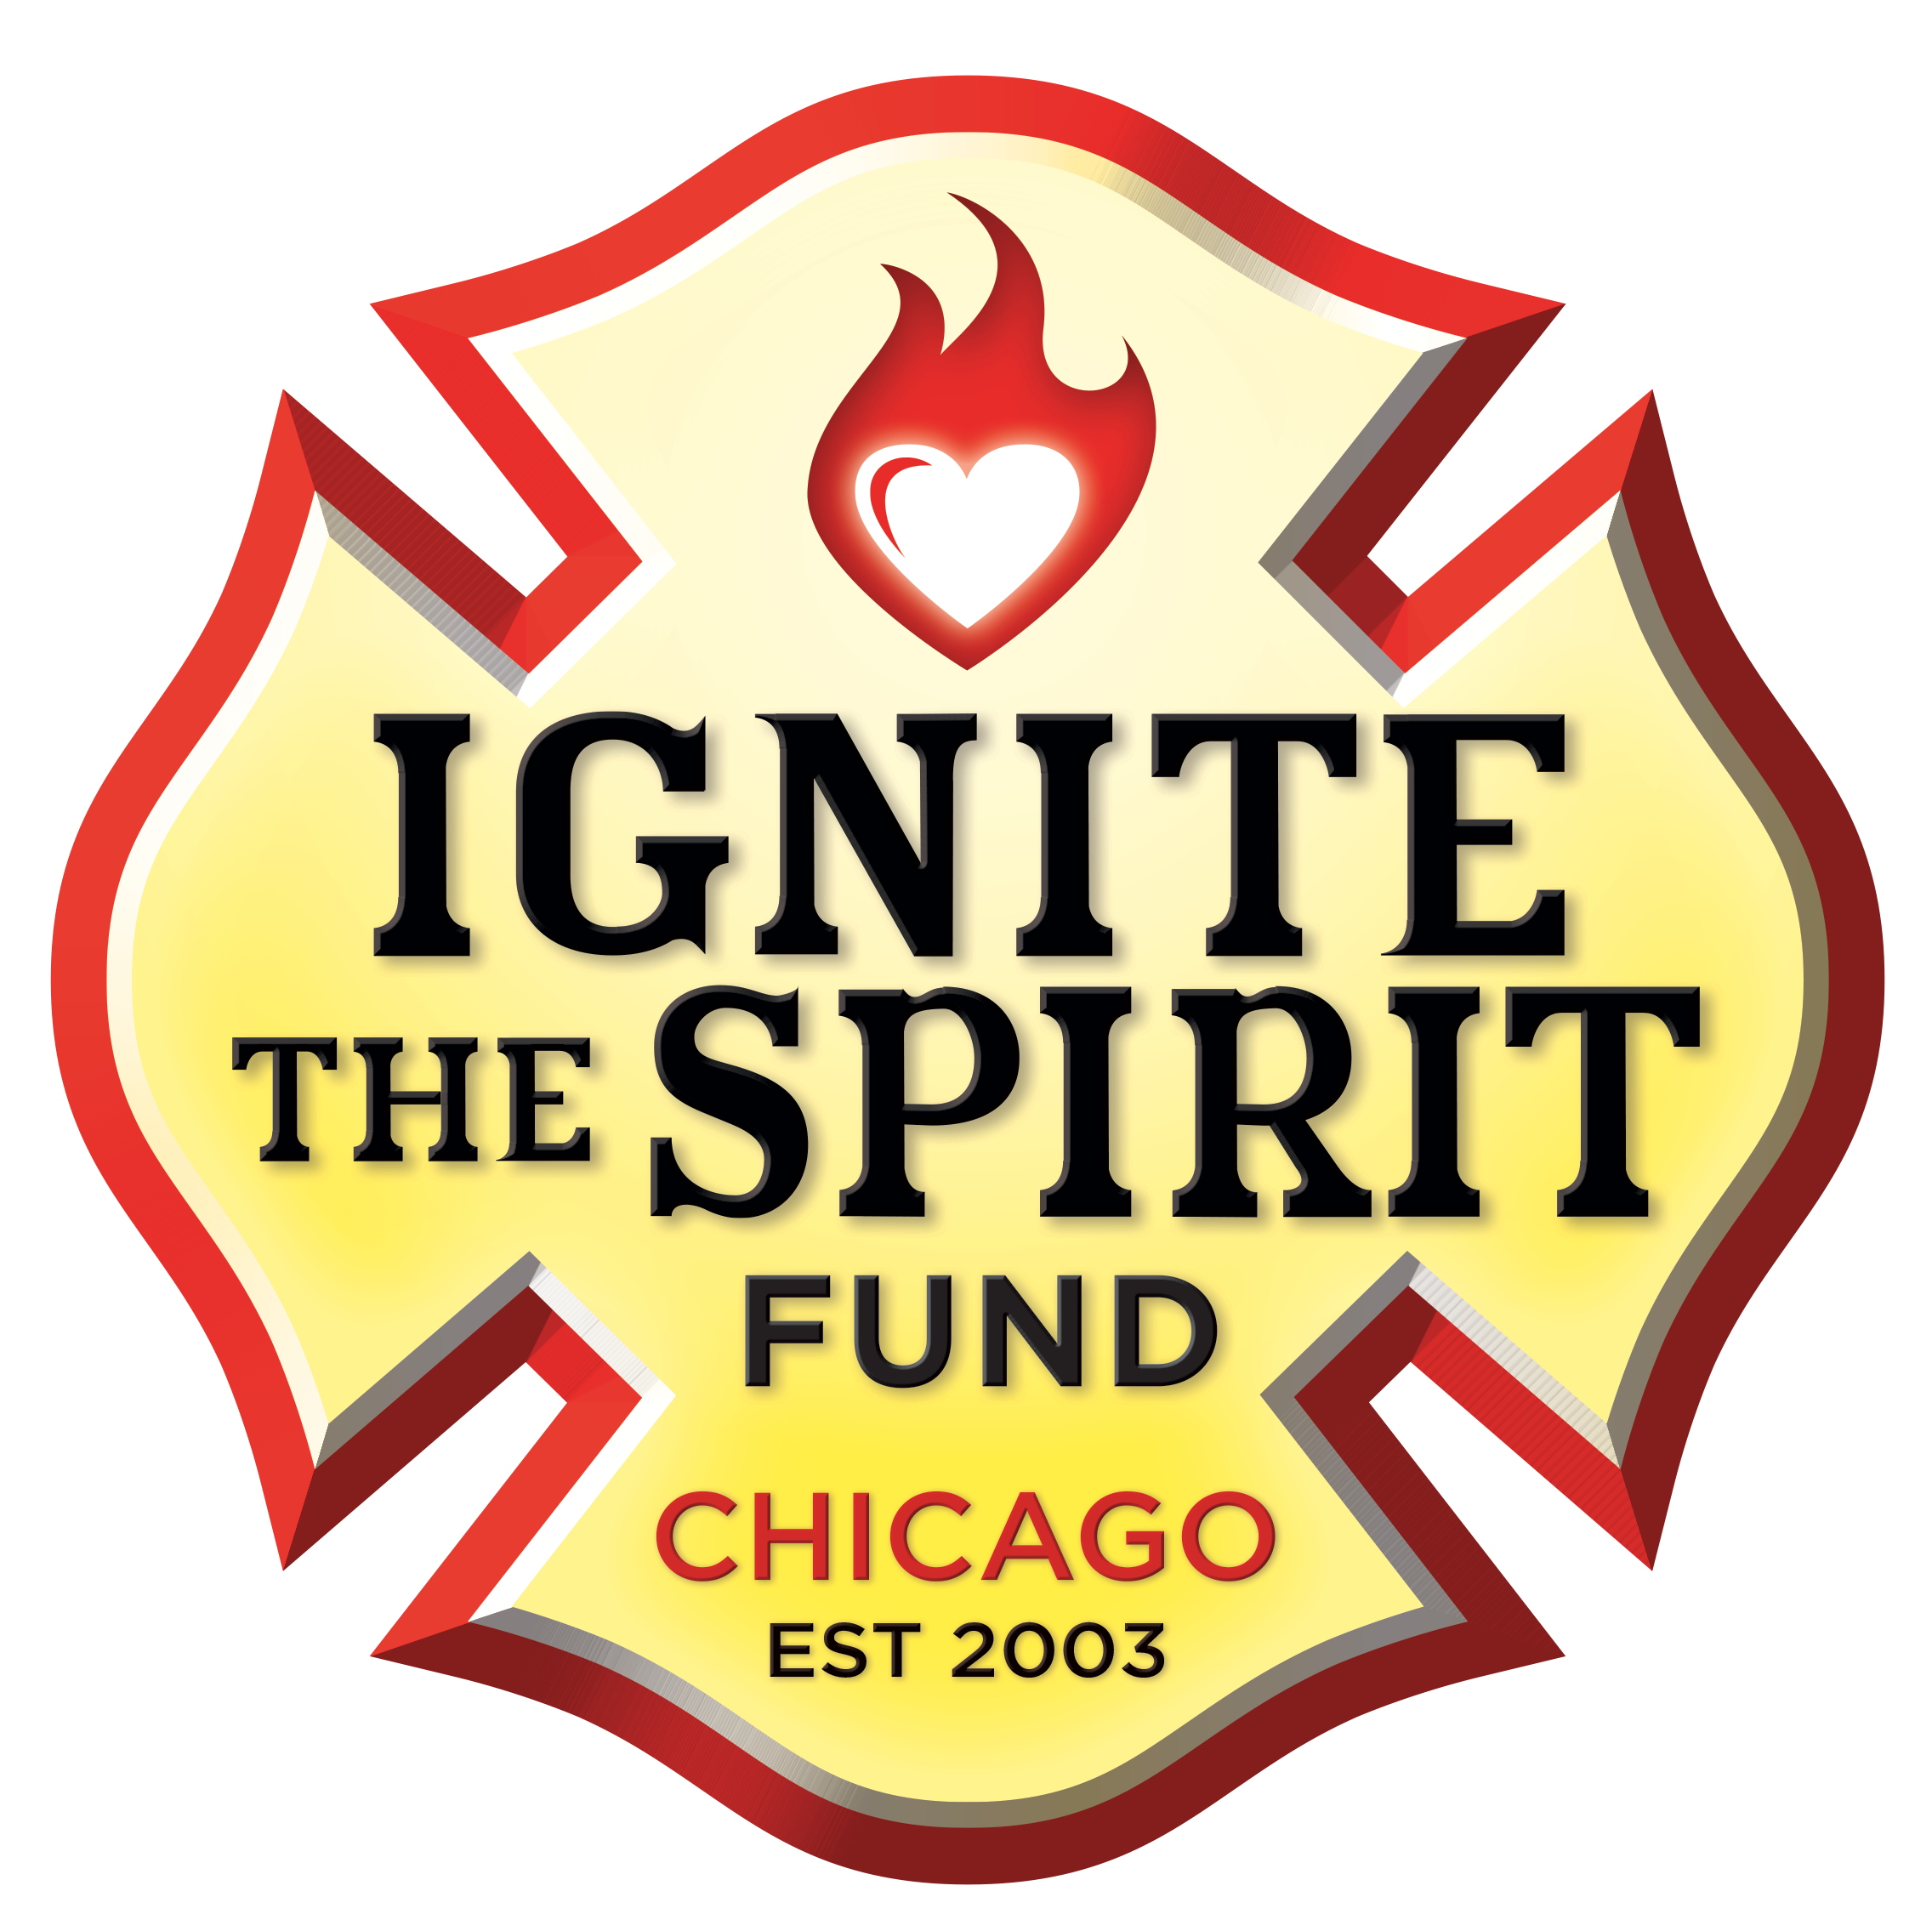 Ignite the Spirit Fund Chicago